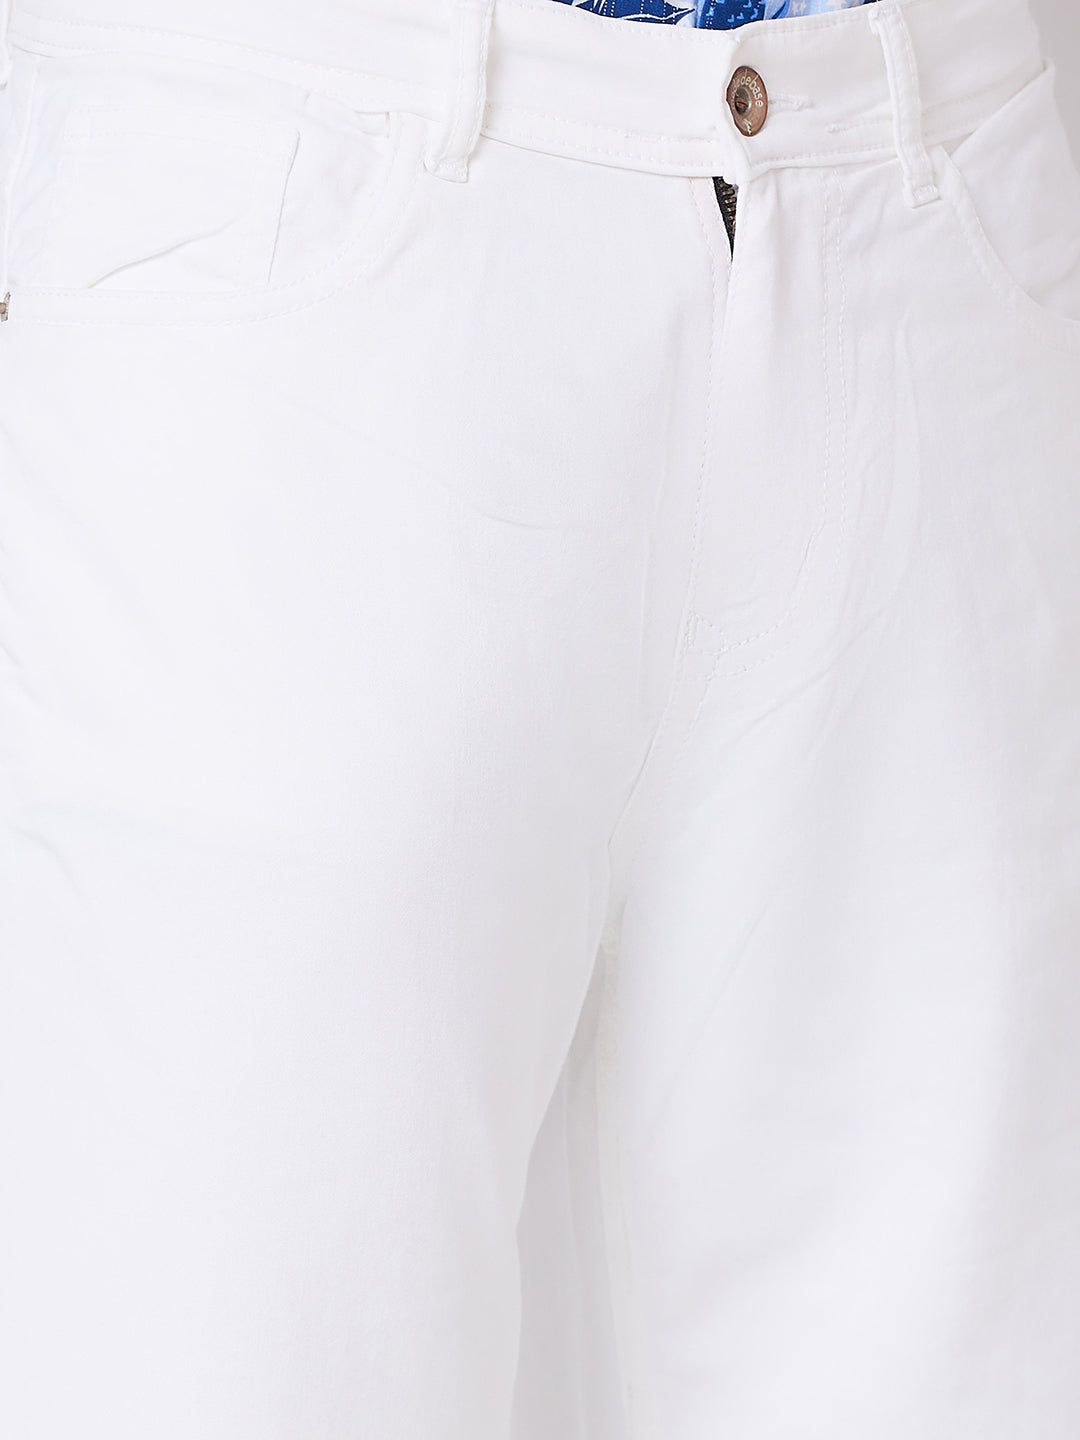 White Shorts For Mens